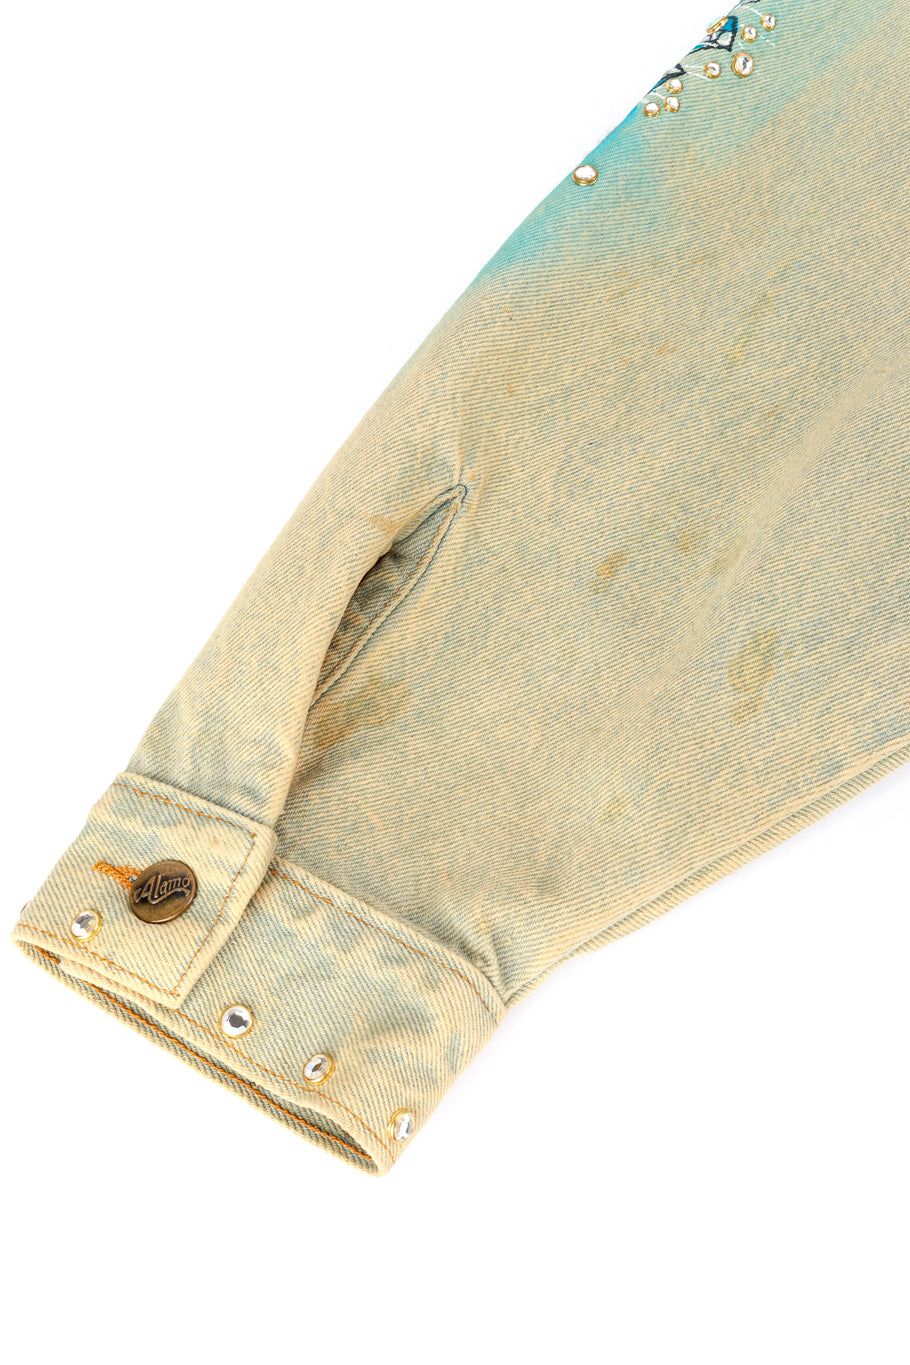 Vintage Tony Alamo Beverly Hills Jacket sleeve stain closeup @recess la